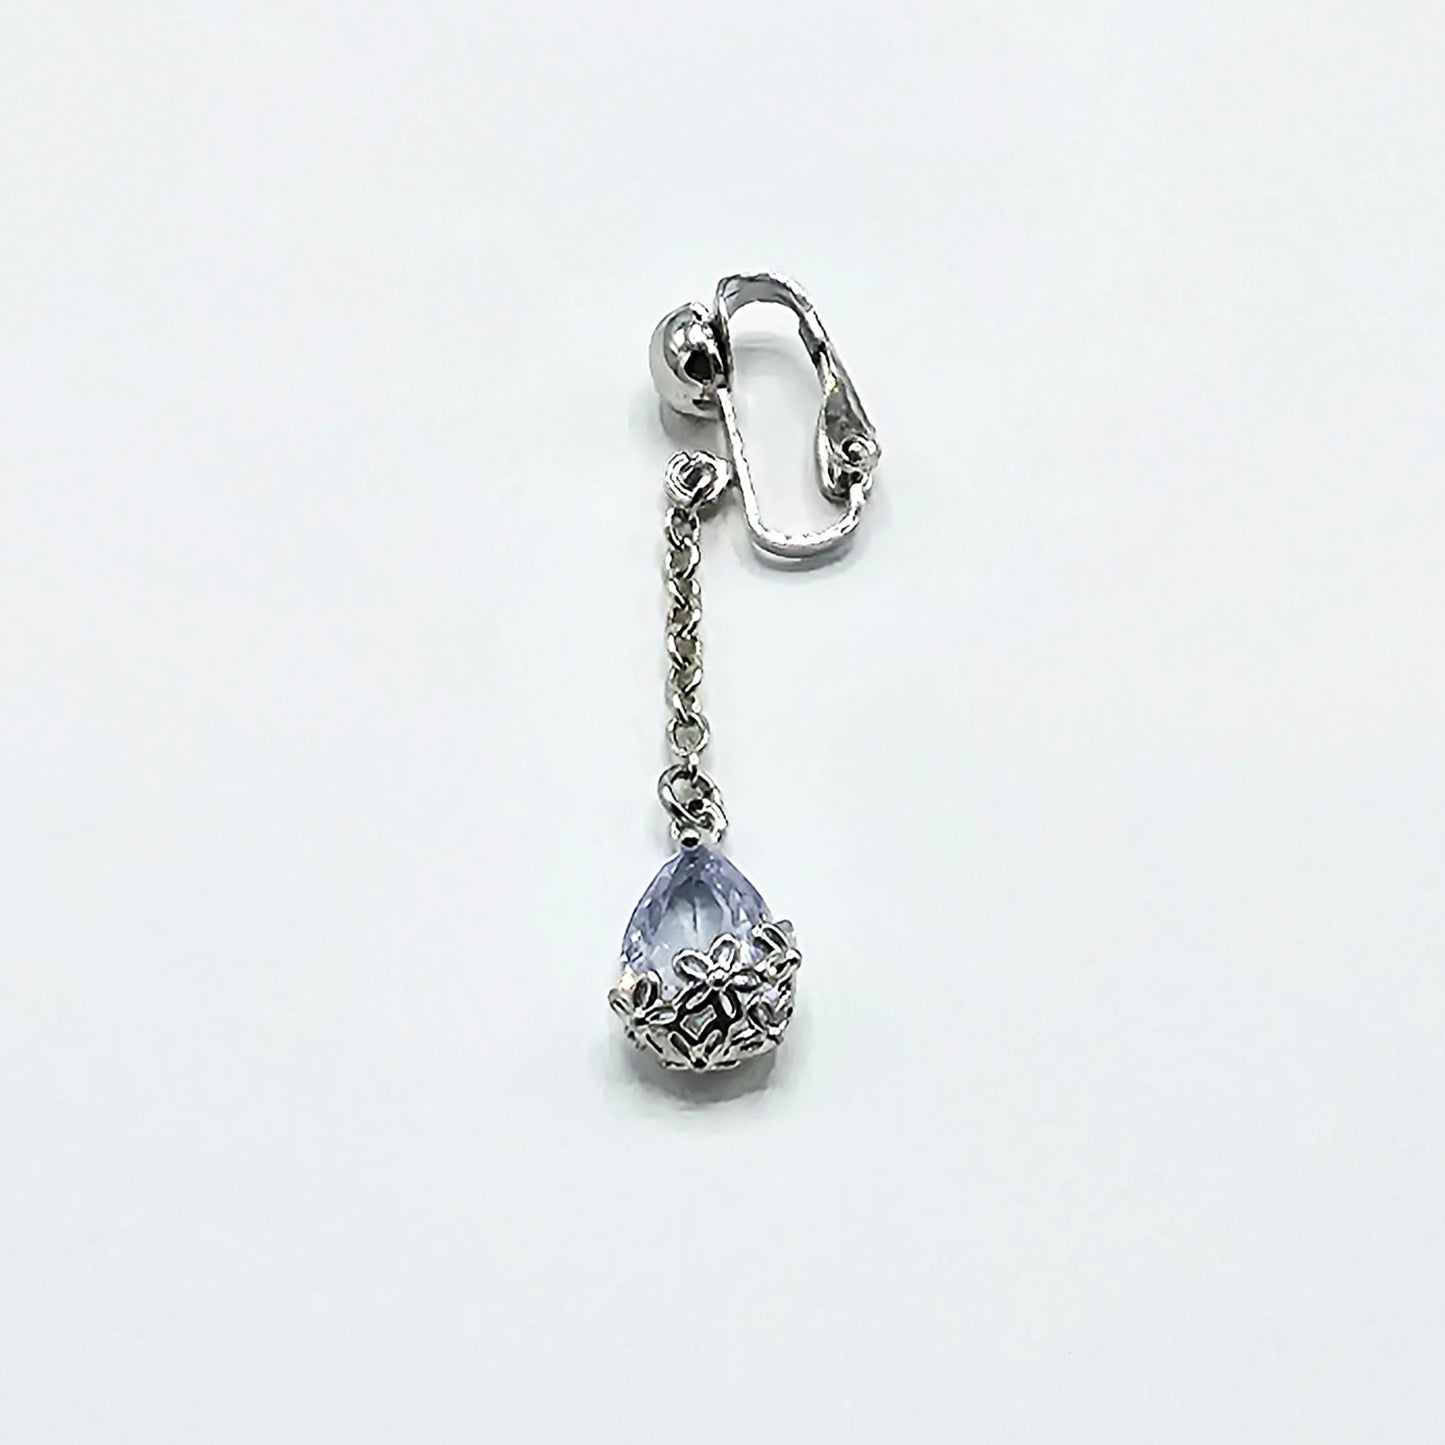 Non Piercing Vaginal Jewelry Clip with Cubic Zirconia Chain Dangle. VCH Clip, Clitoral Jewelry